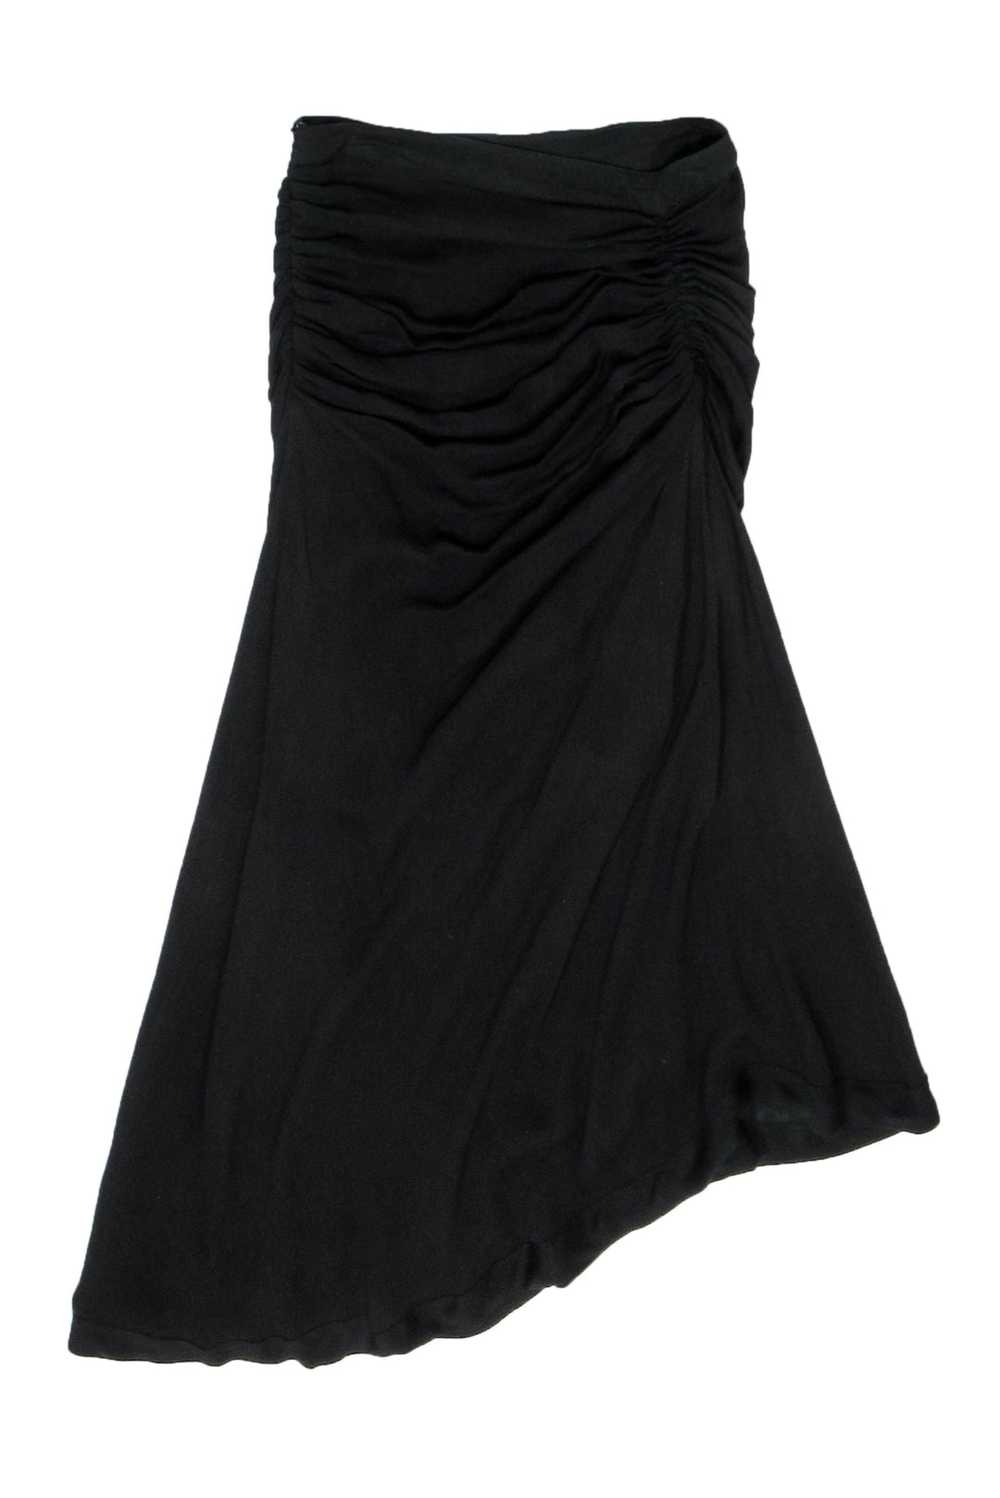 IRO - Black Silk Blend Midi Skirt w/ Ruching Sz 2 - image 1